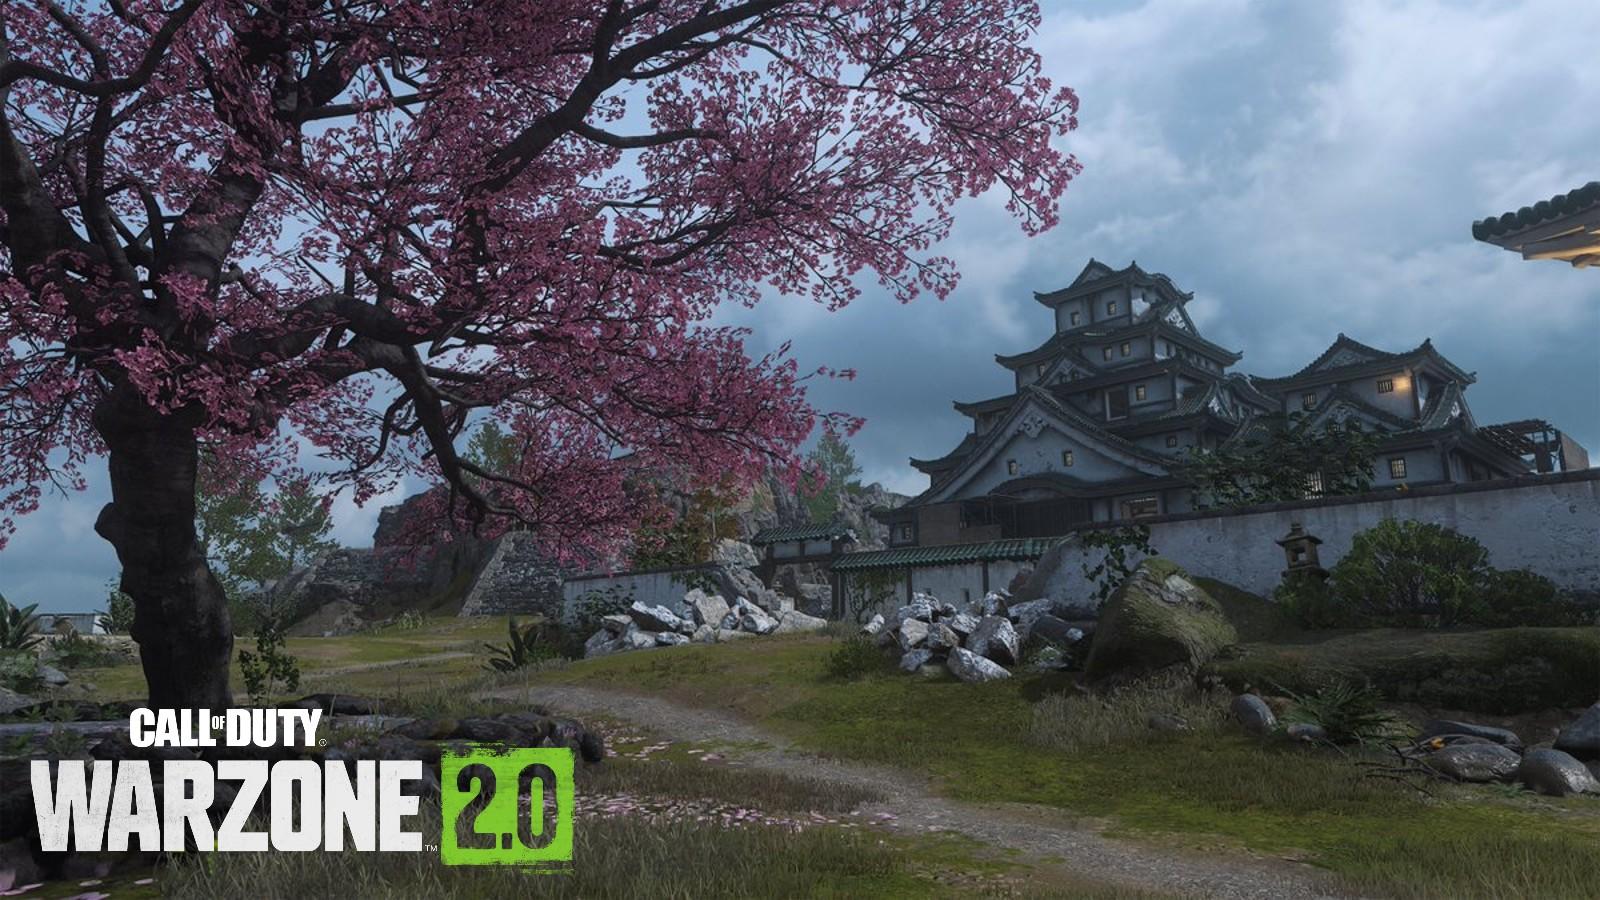 Warzone 2 Season 2: release date, features, Ashika Island, and Resurgence  mode